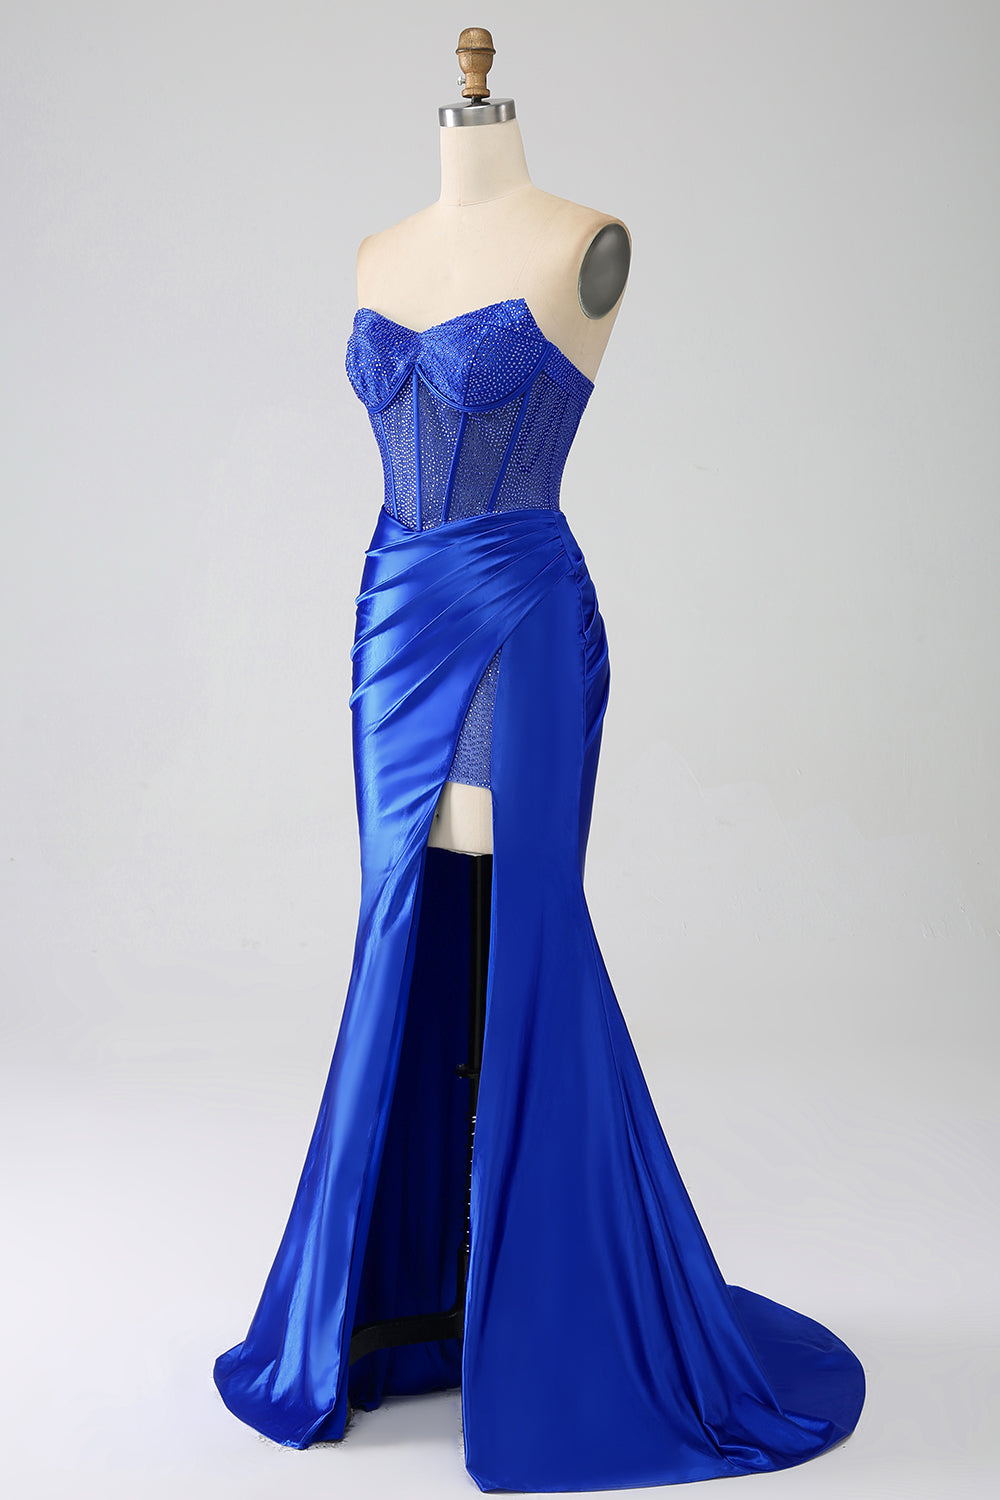 ZAPAKA Women Royal Blue Corset Prom Dress with Beading Mermaid Strapless  Evening Dress with Ruffles